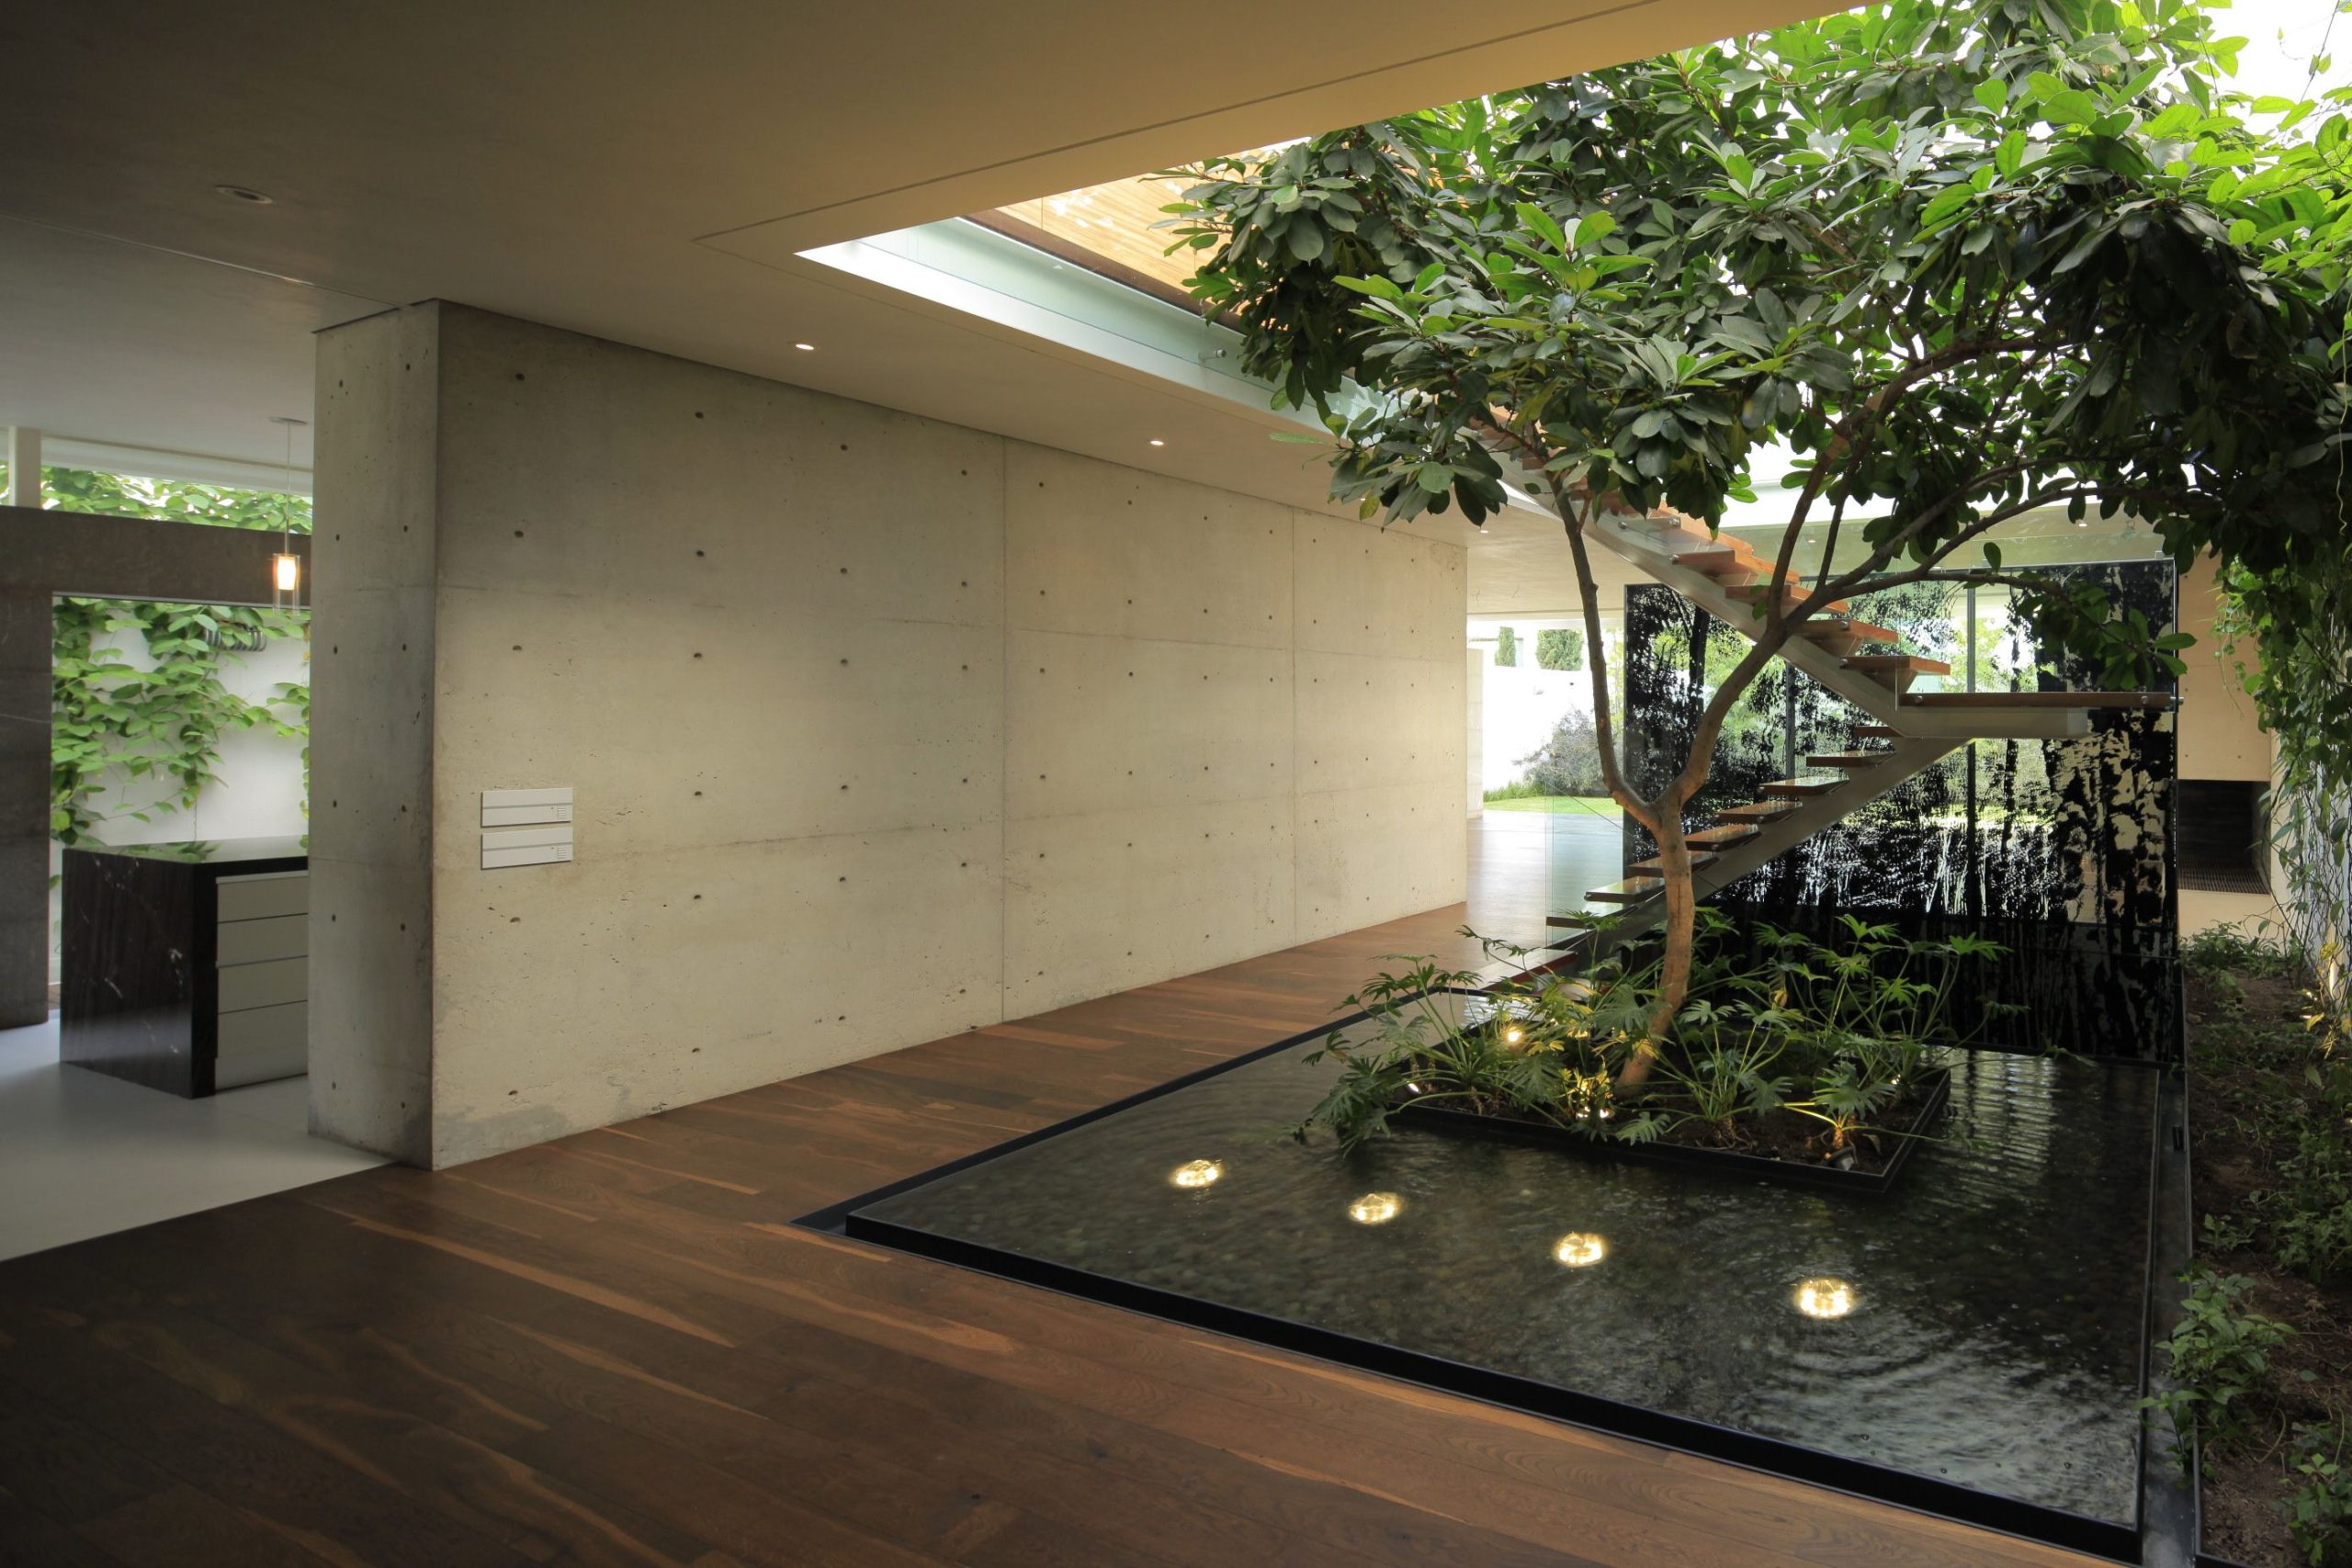 Zen sanctuary with indoor plants and natural materials